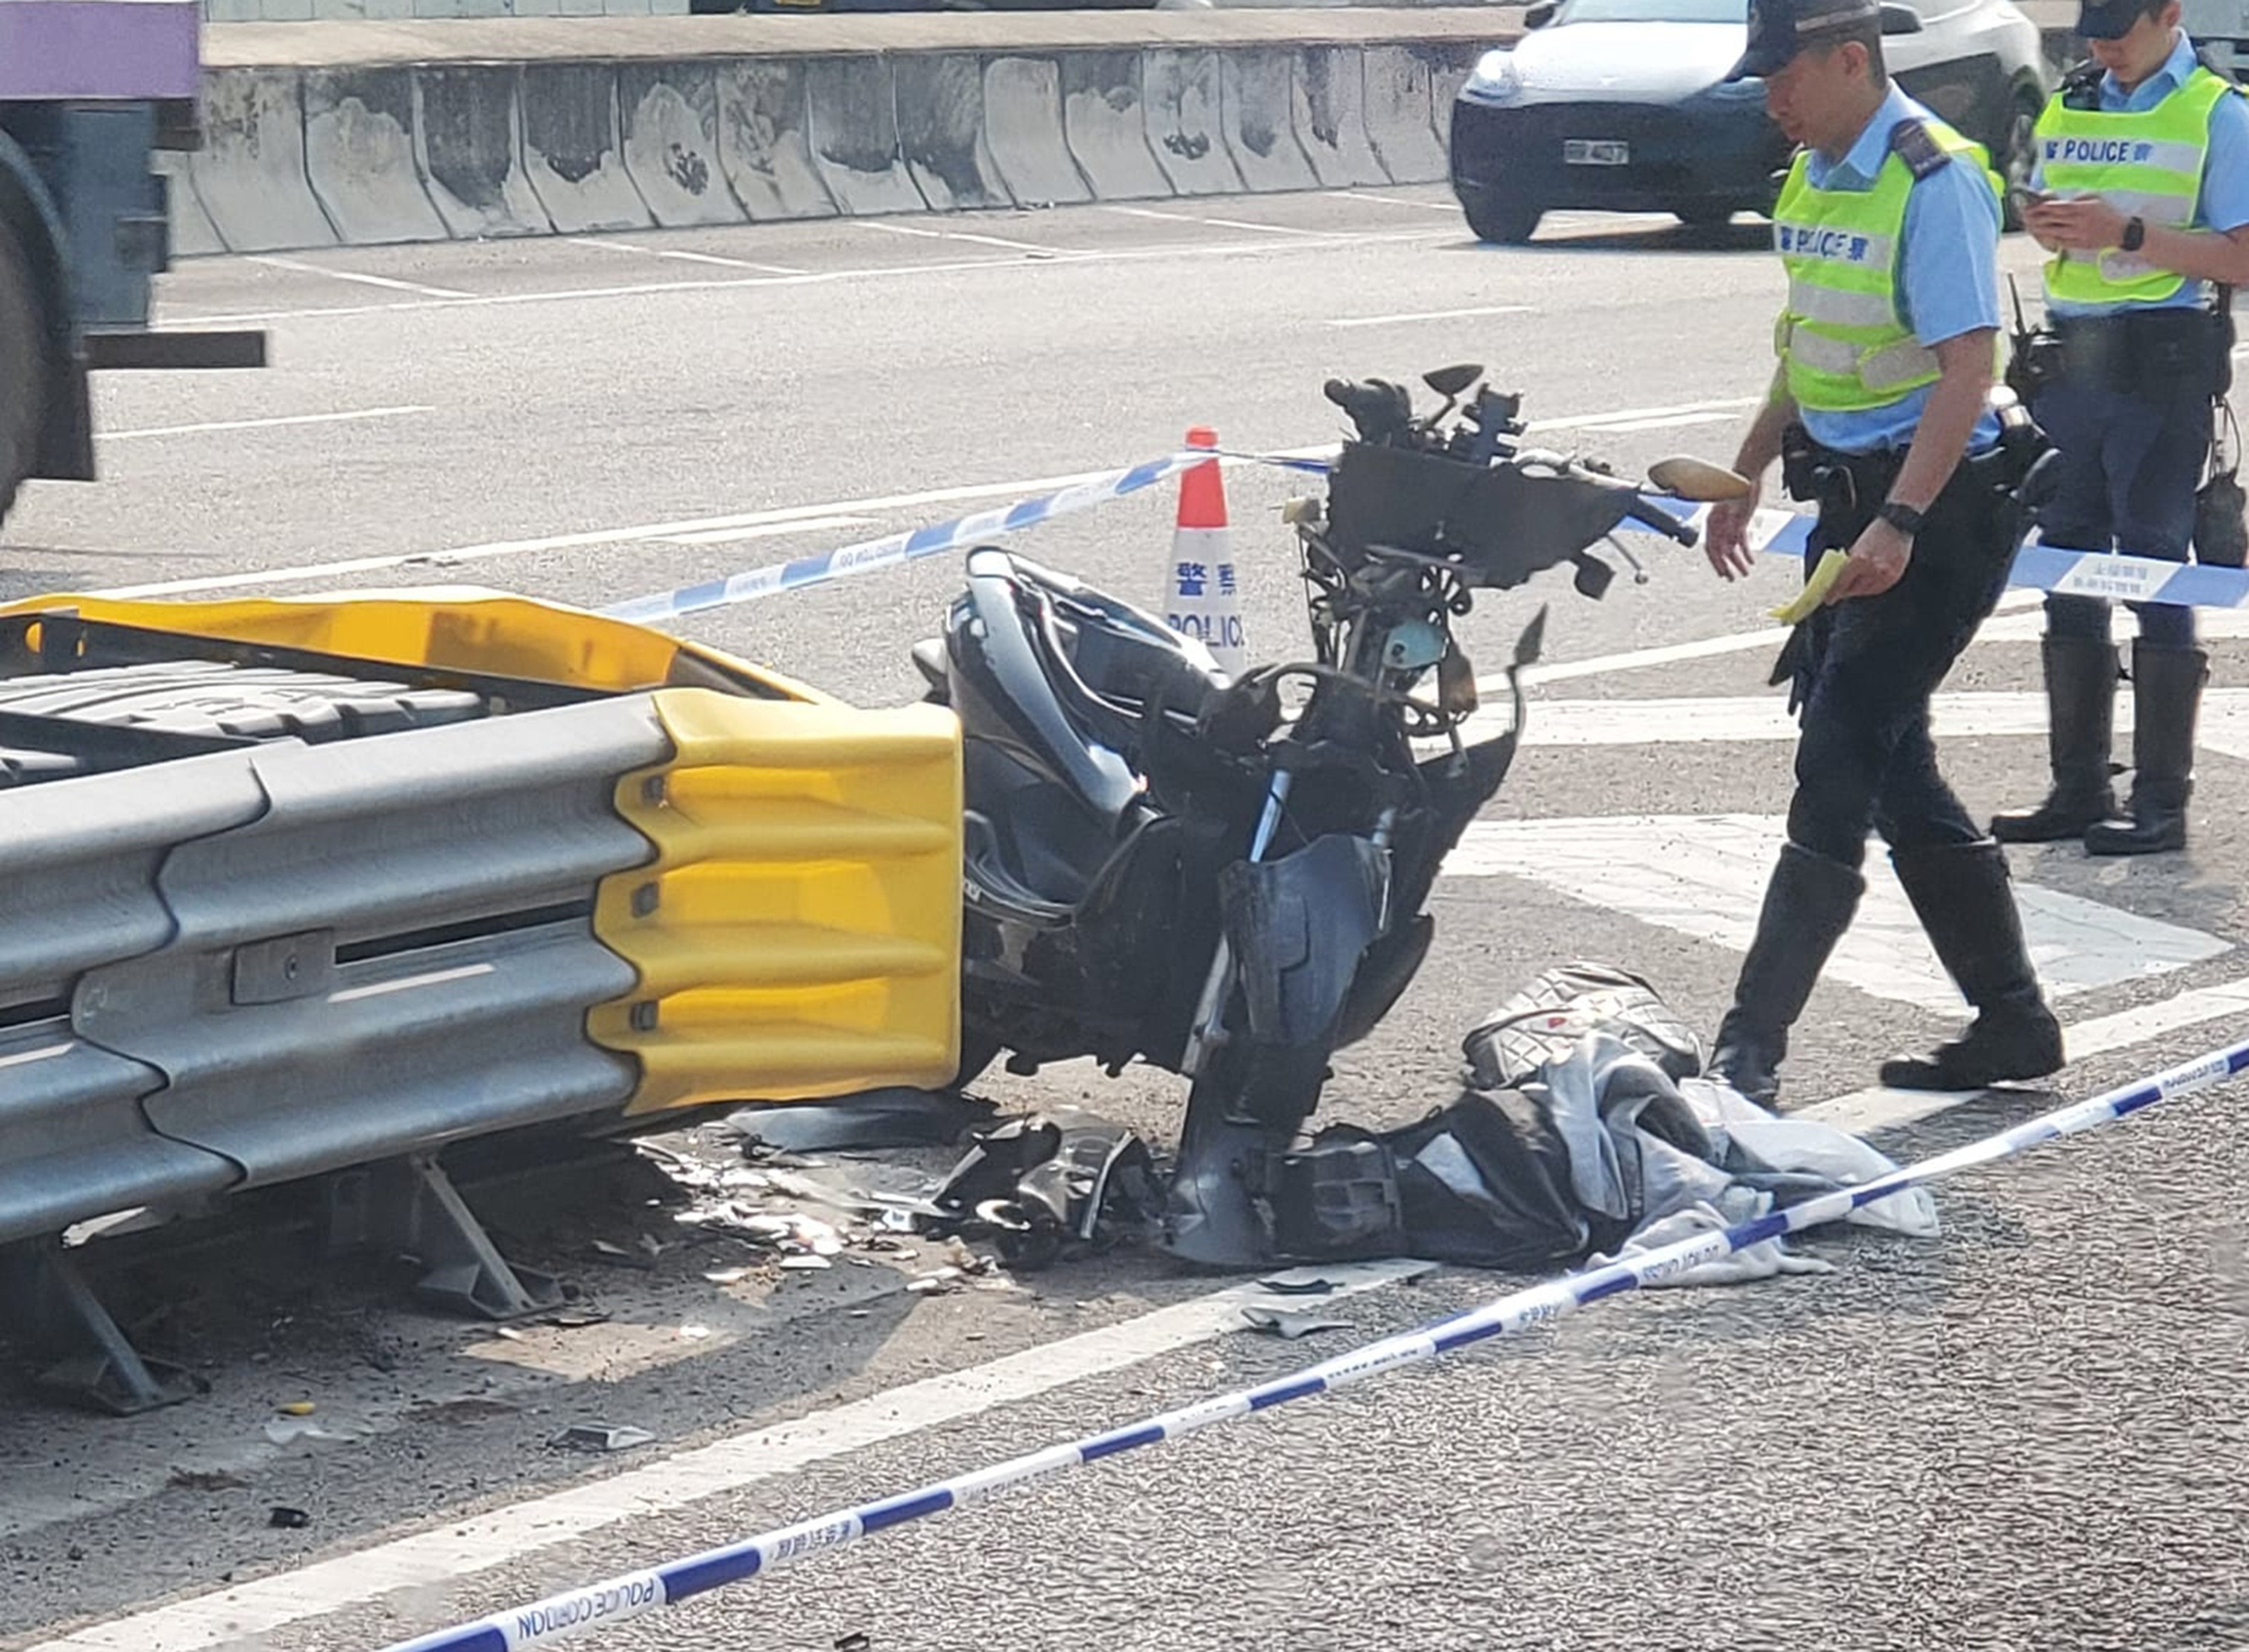 A motorcyclist crashed while approaching a bus exchange on Tuen Mun Road. Photo: Facebook/Ben Ben Ben